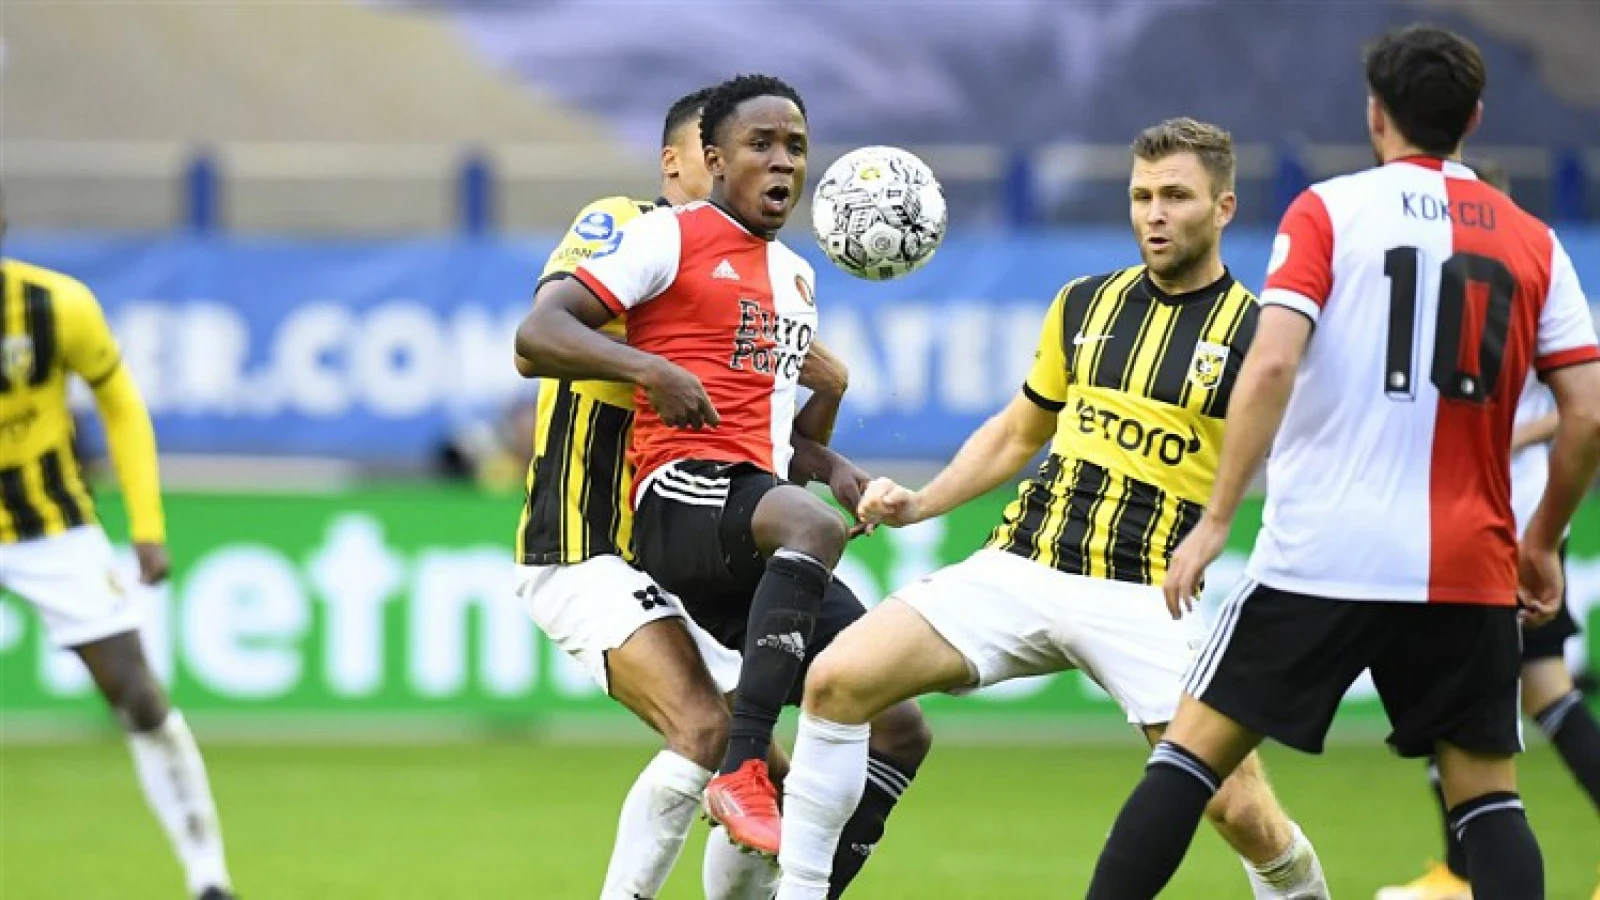 Extreem lage zuivere speeltijd bij duel tussen Vitesse en Feyenoord